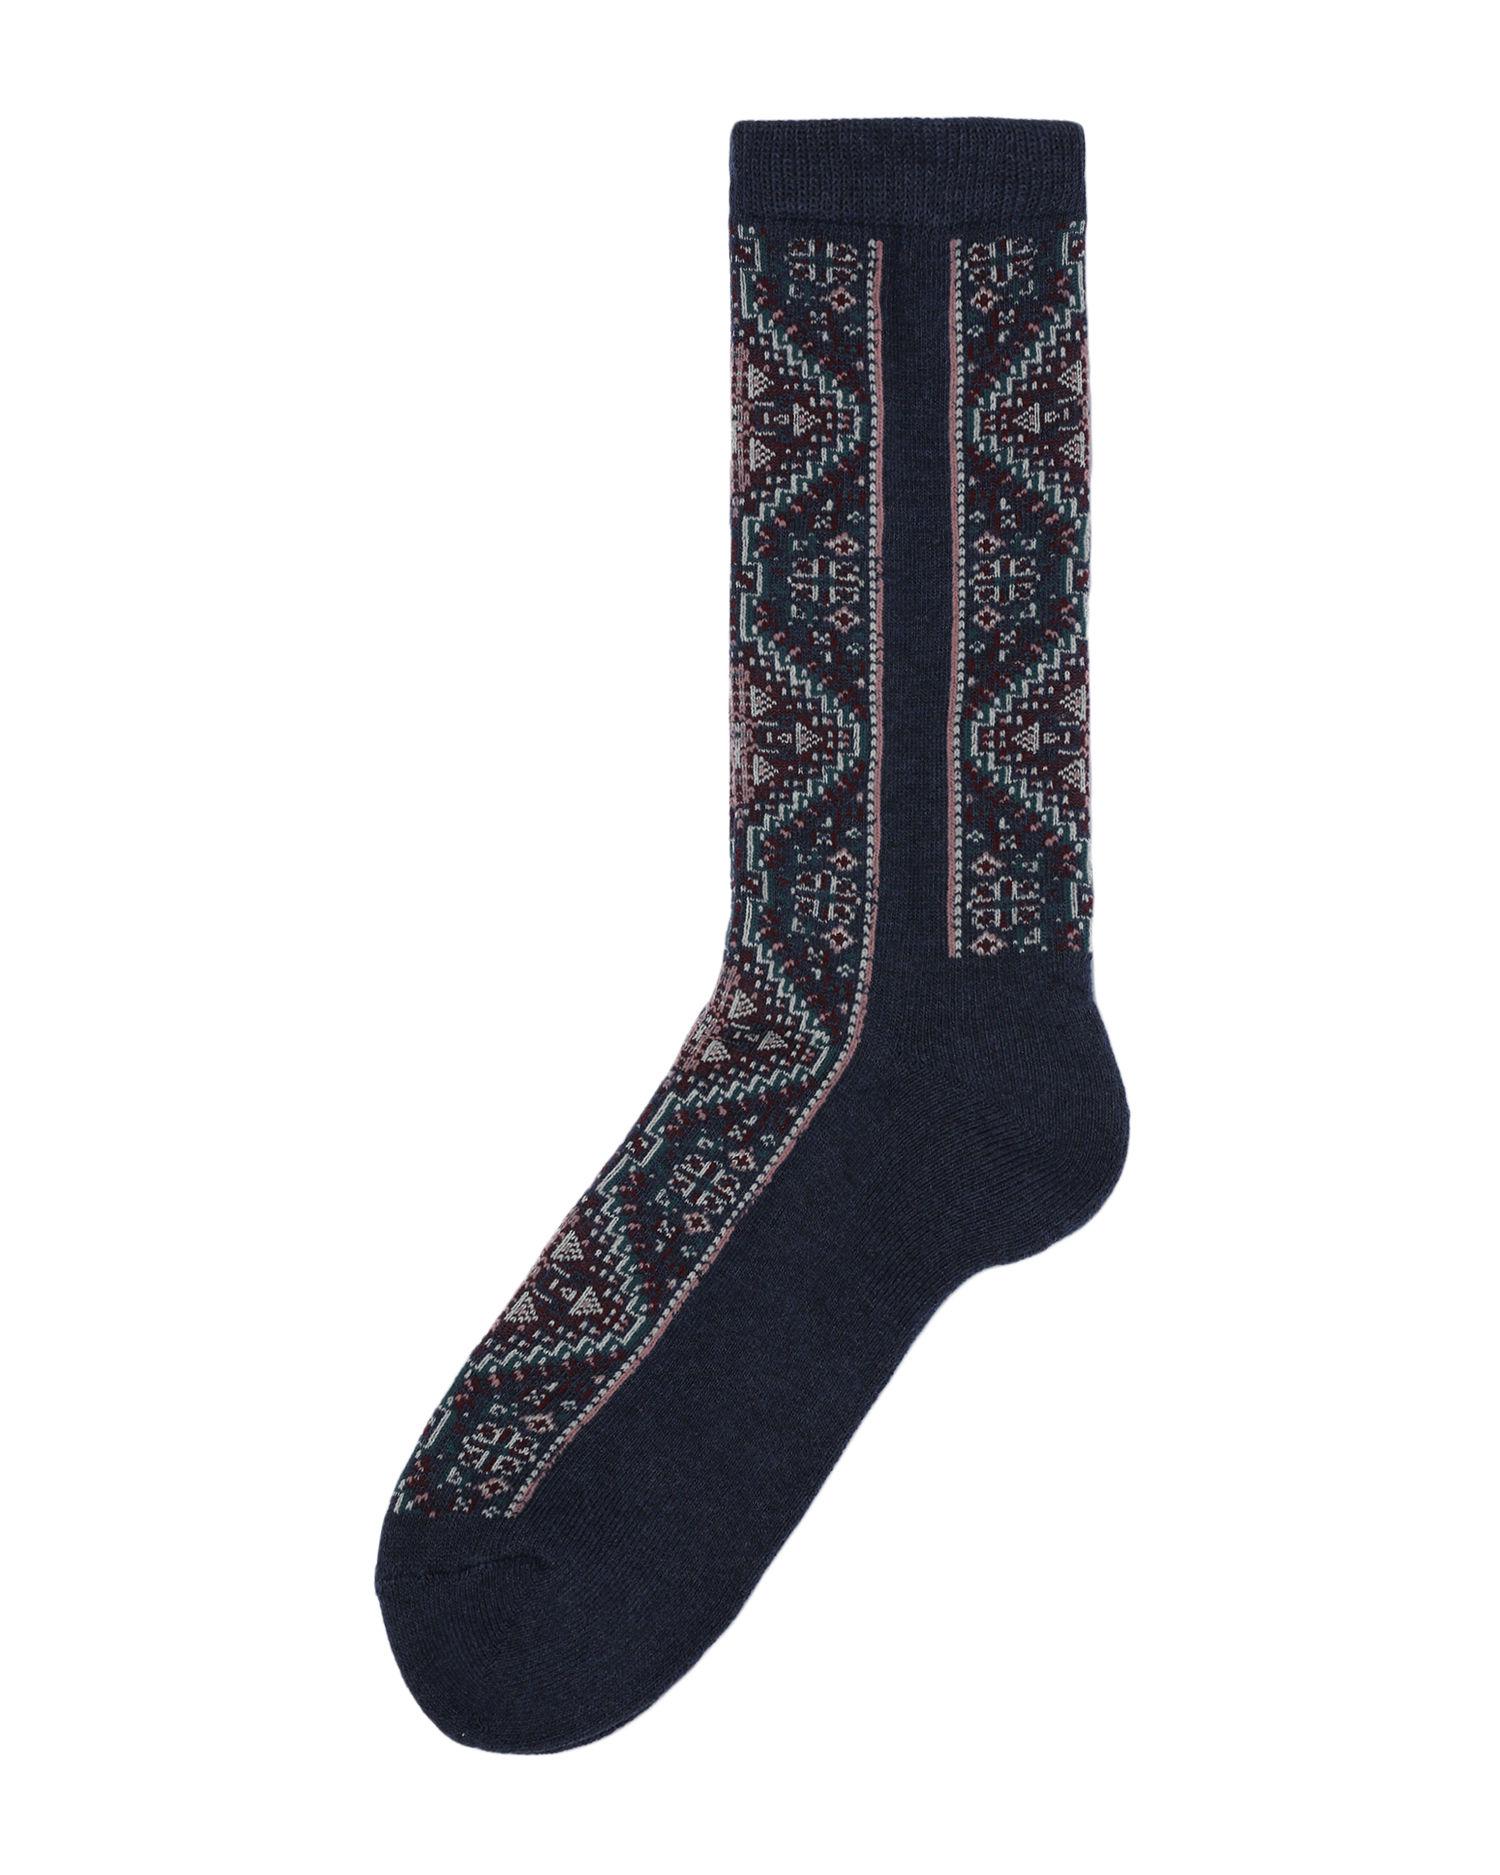 Pattern intarsia socks by BEAMS